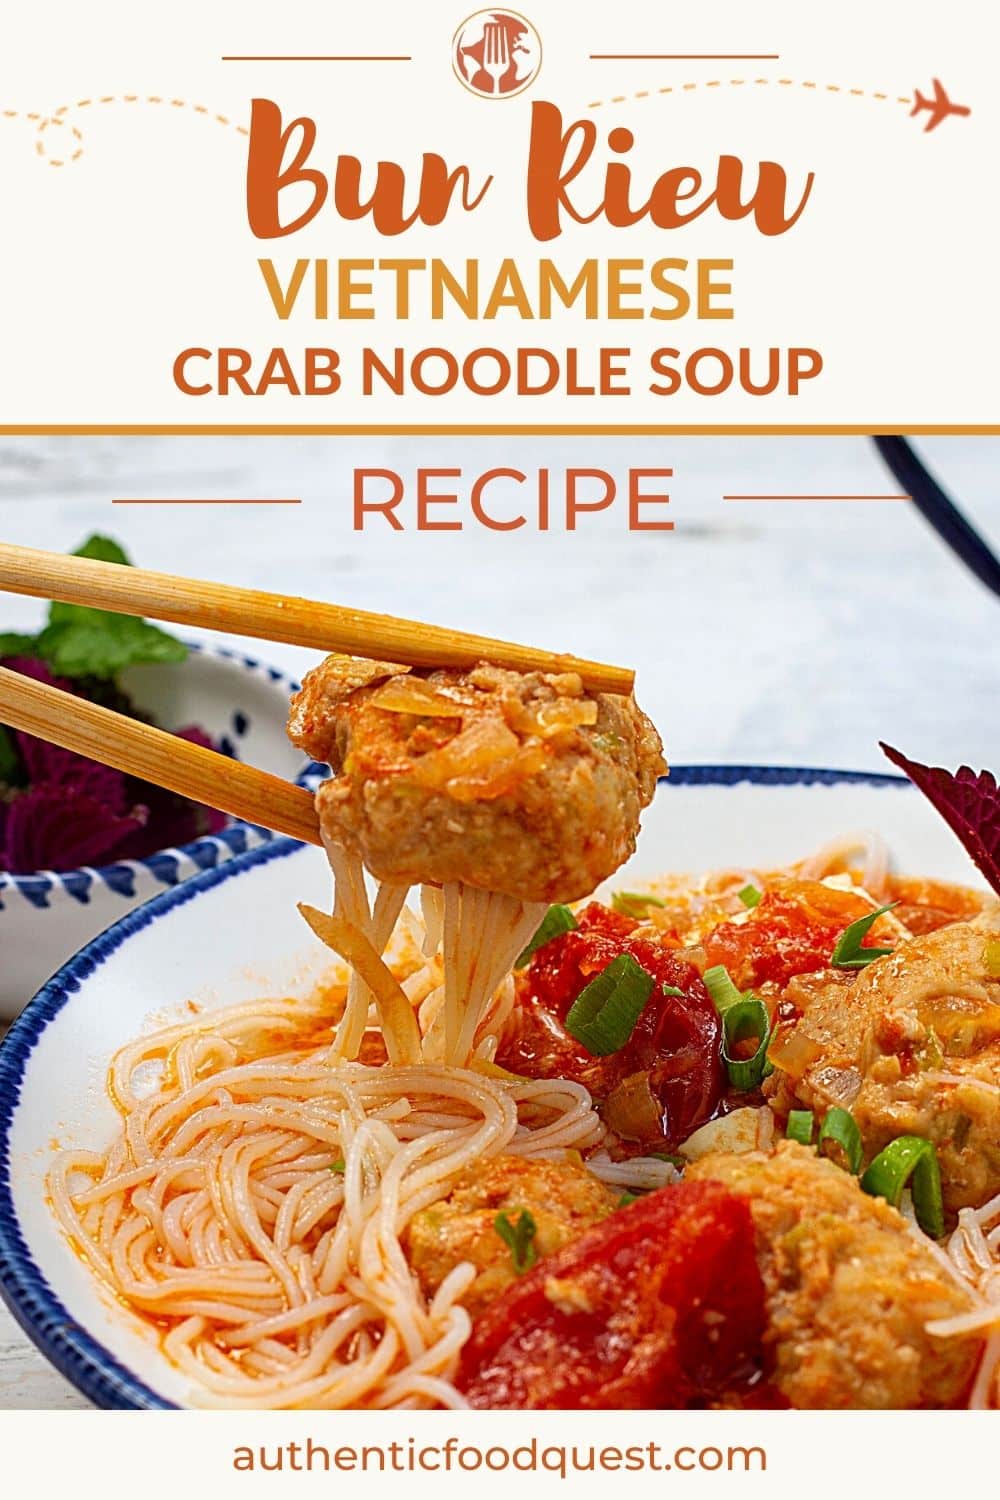 Bun Rieu Recipe: How To Make Vietnamese Crab Noodle Soup